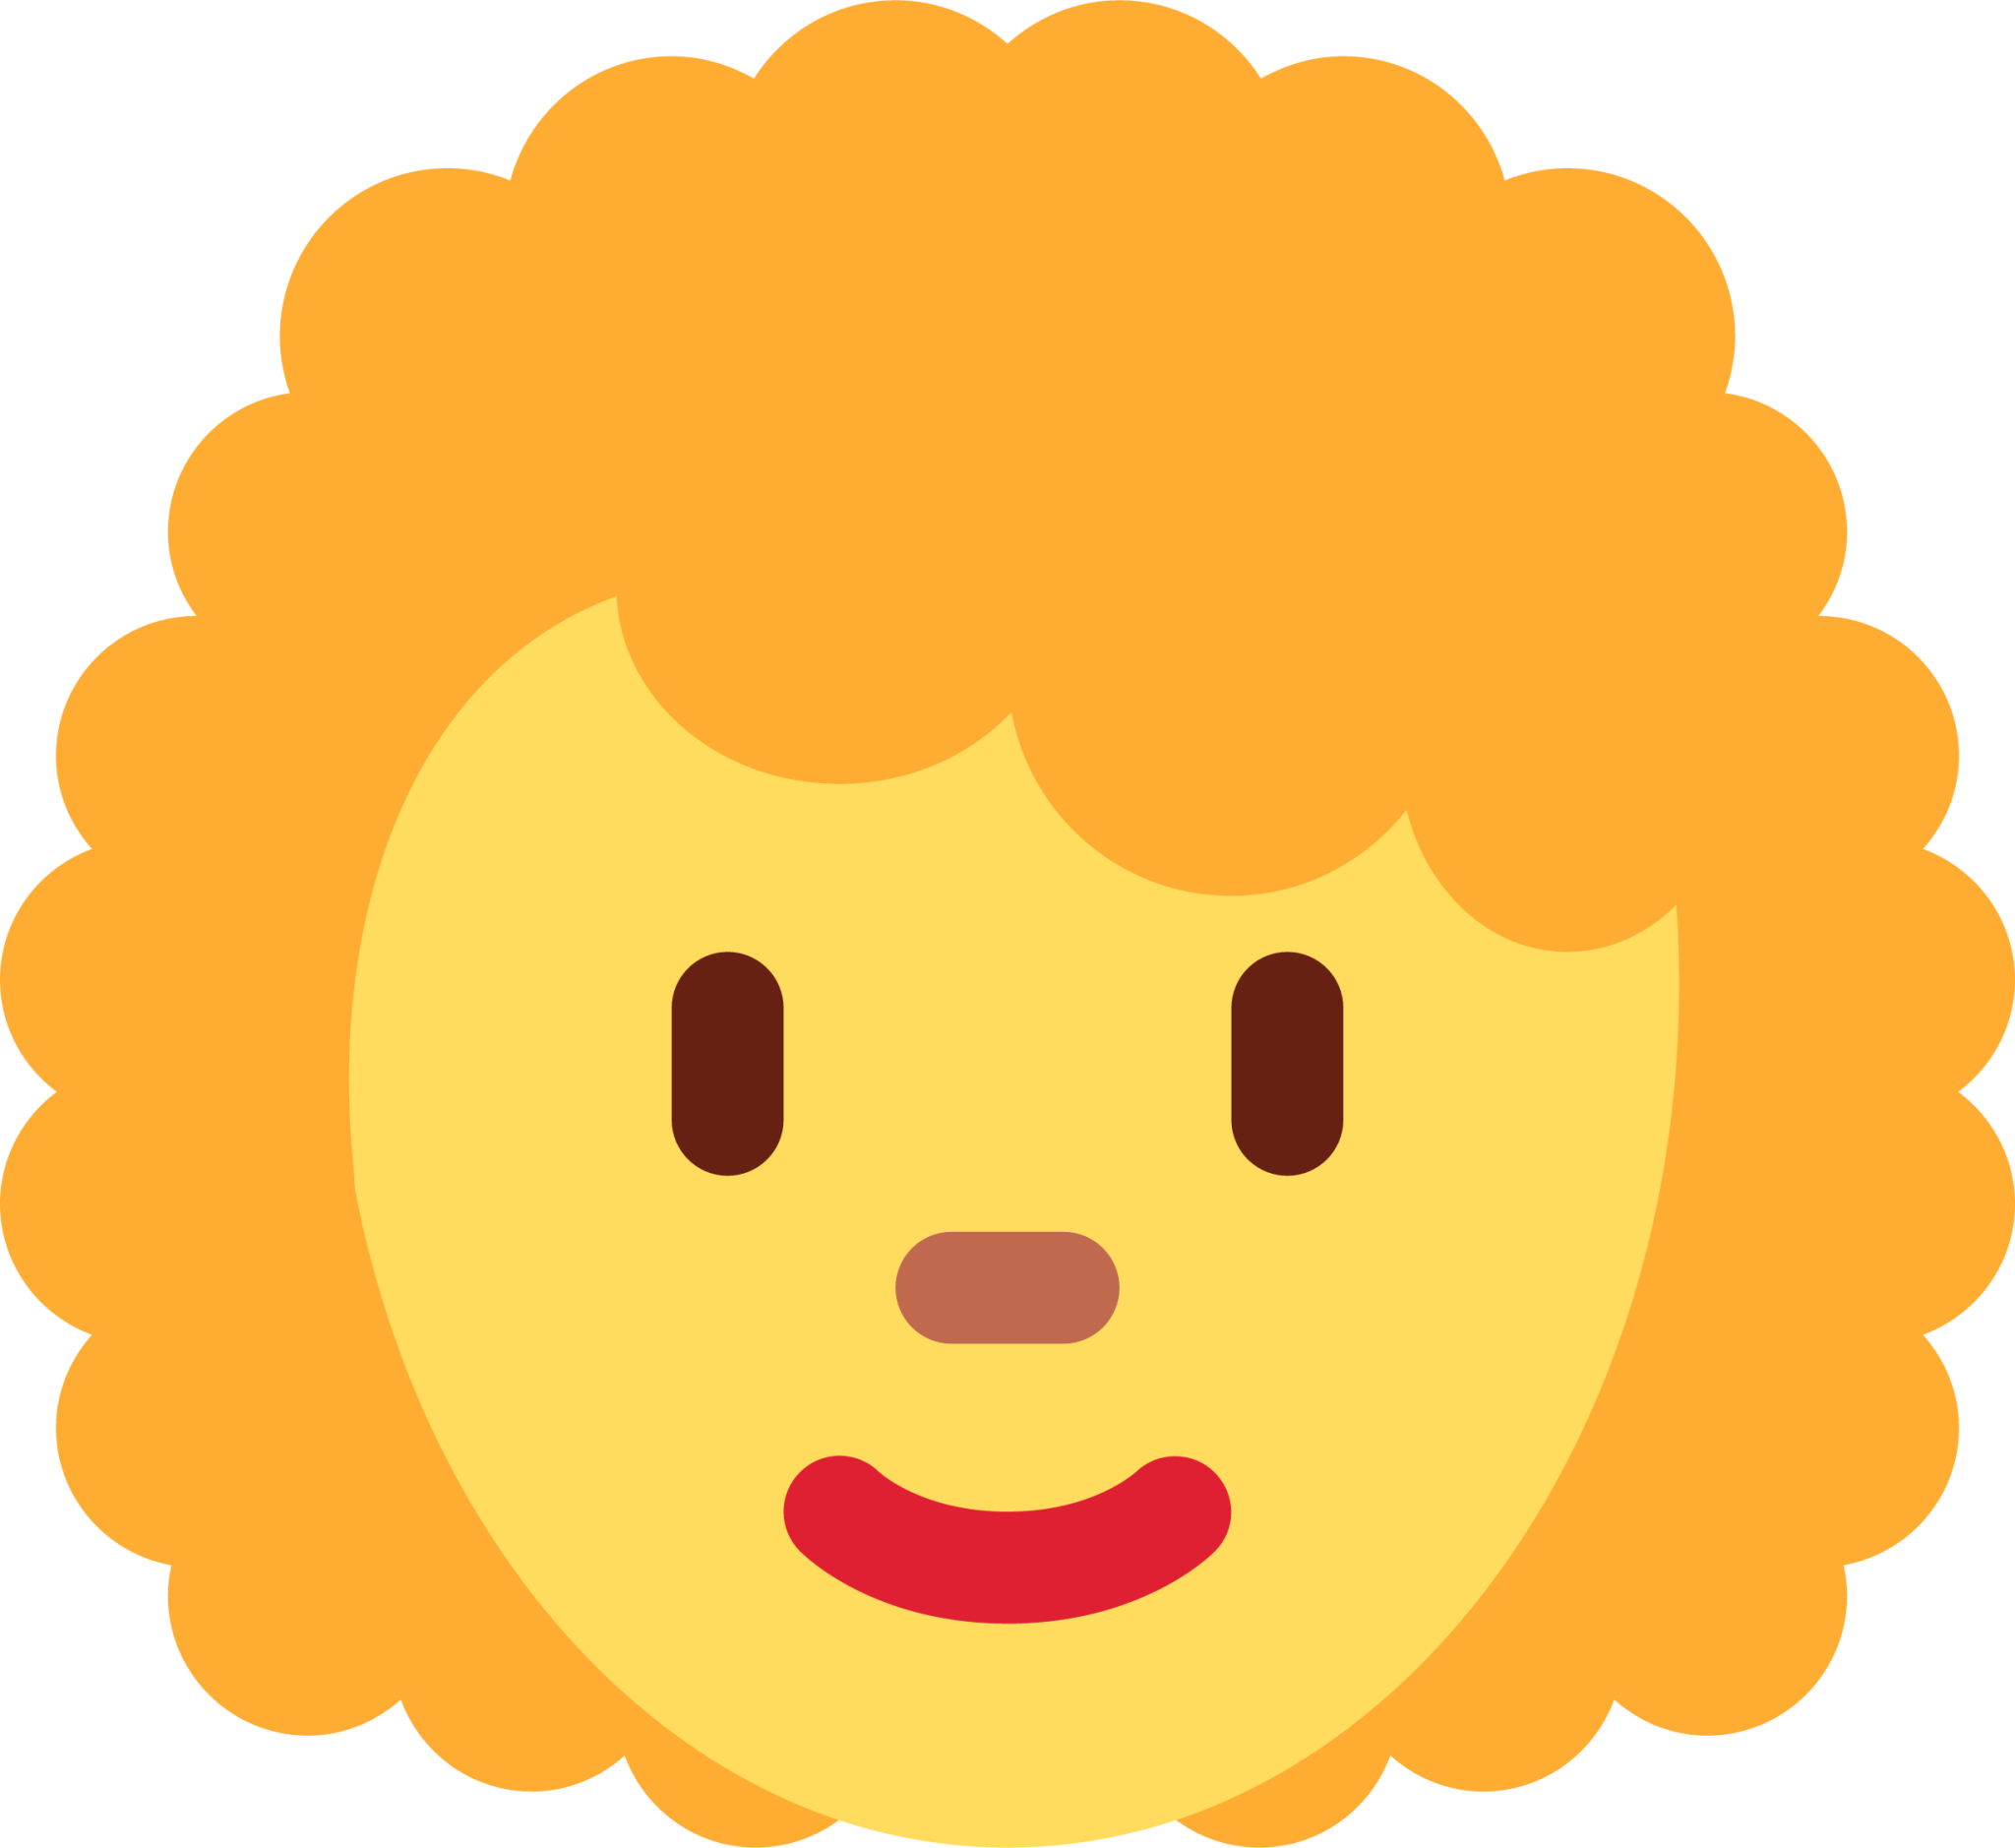 woman: curly hair emoji